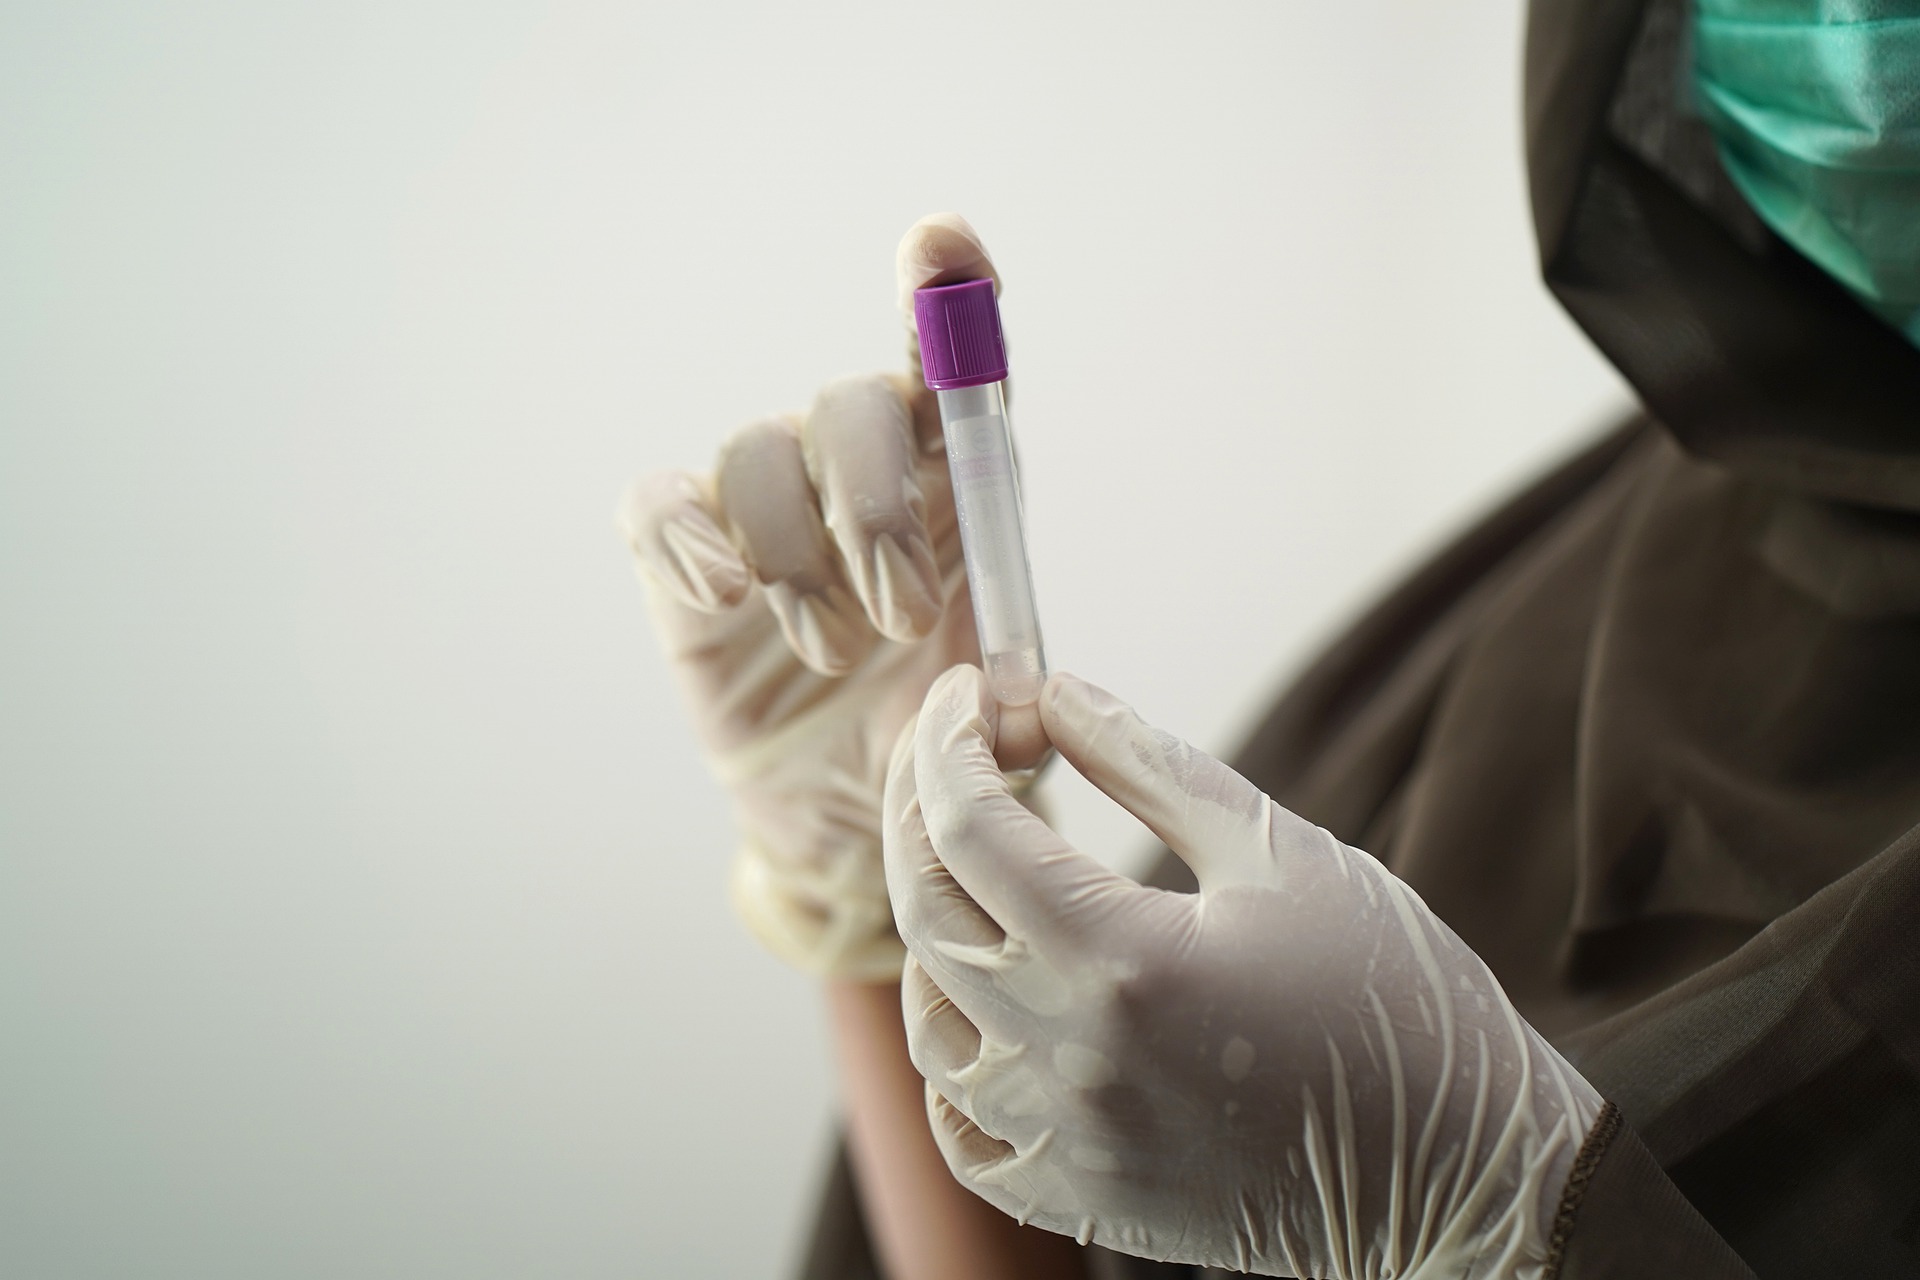 Nurse's gloved hands holding a blood test tube